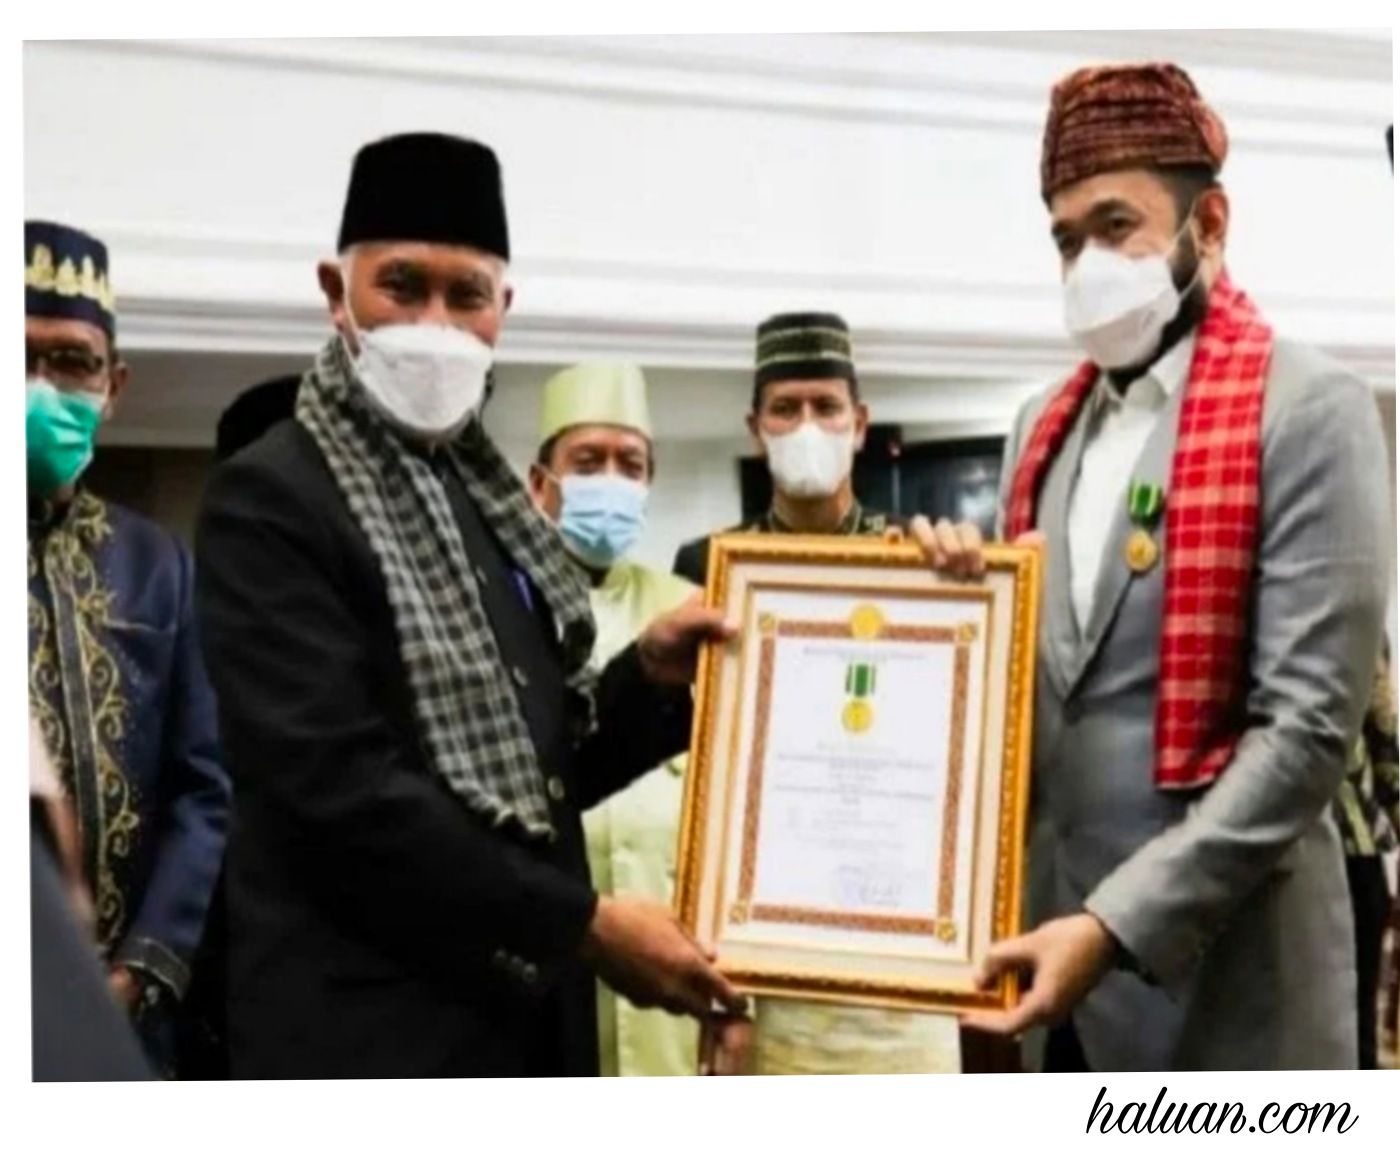 Fokus Kembangkan Koperasi Syariah, Walikota Ini Mendapat Penghargaan dari Kemenkop UKM